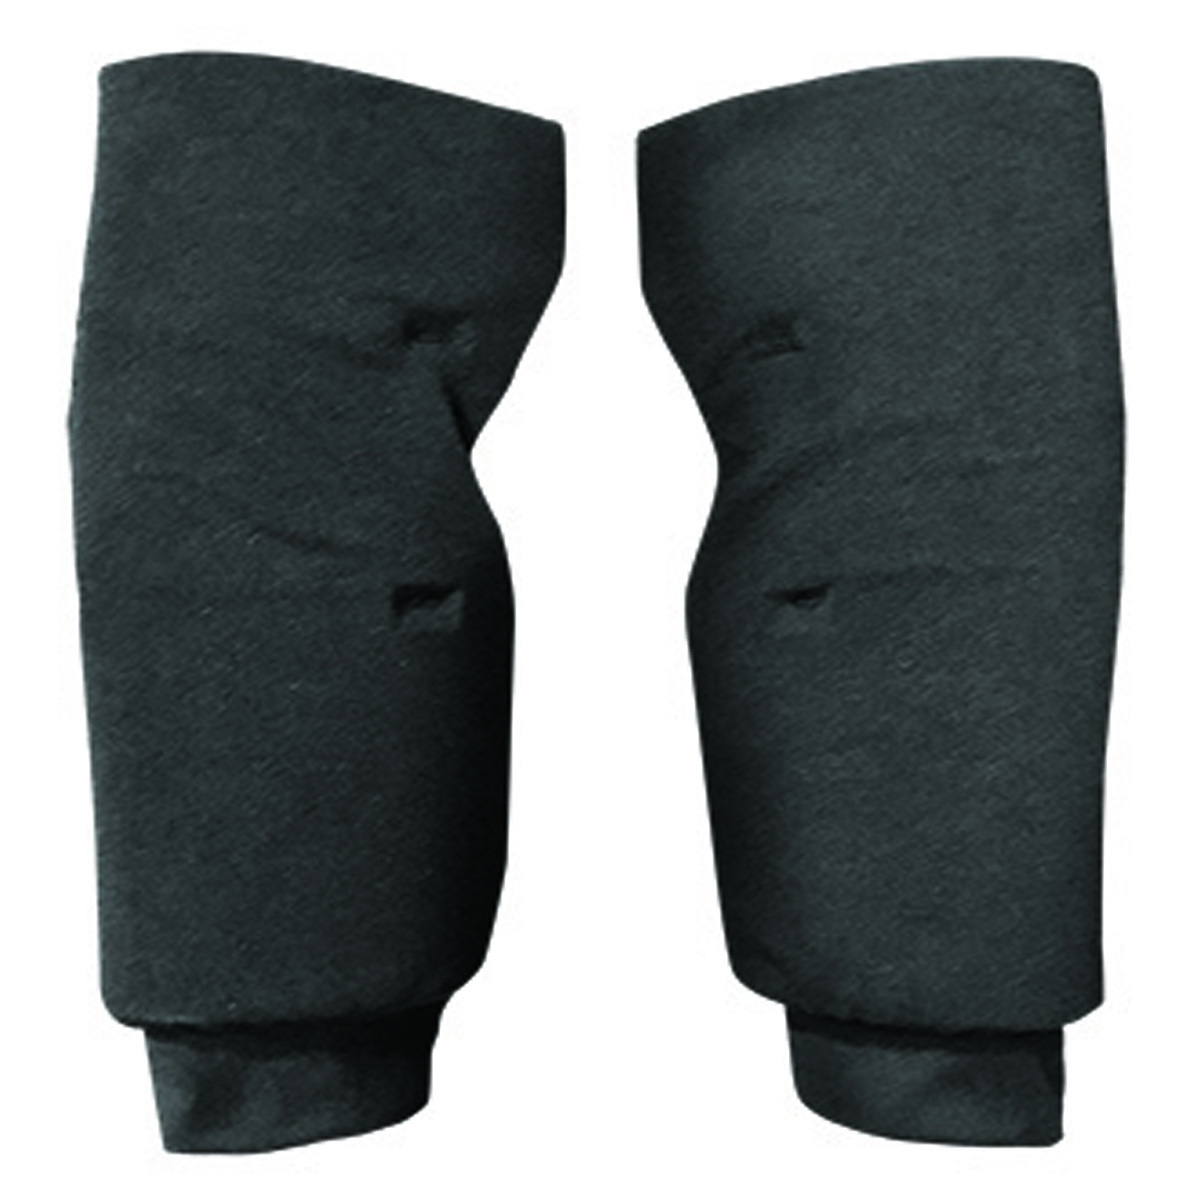 OccuNomix Medium Black OccuNomix Polyester/Foam Knee Pad